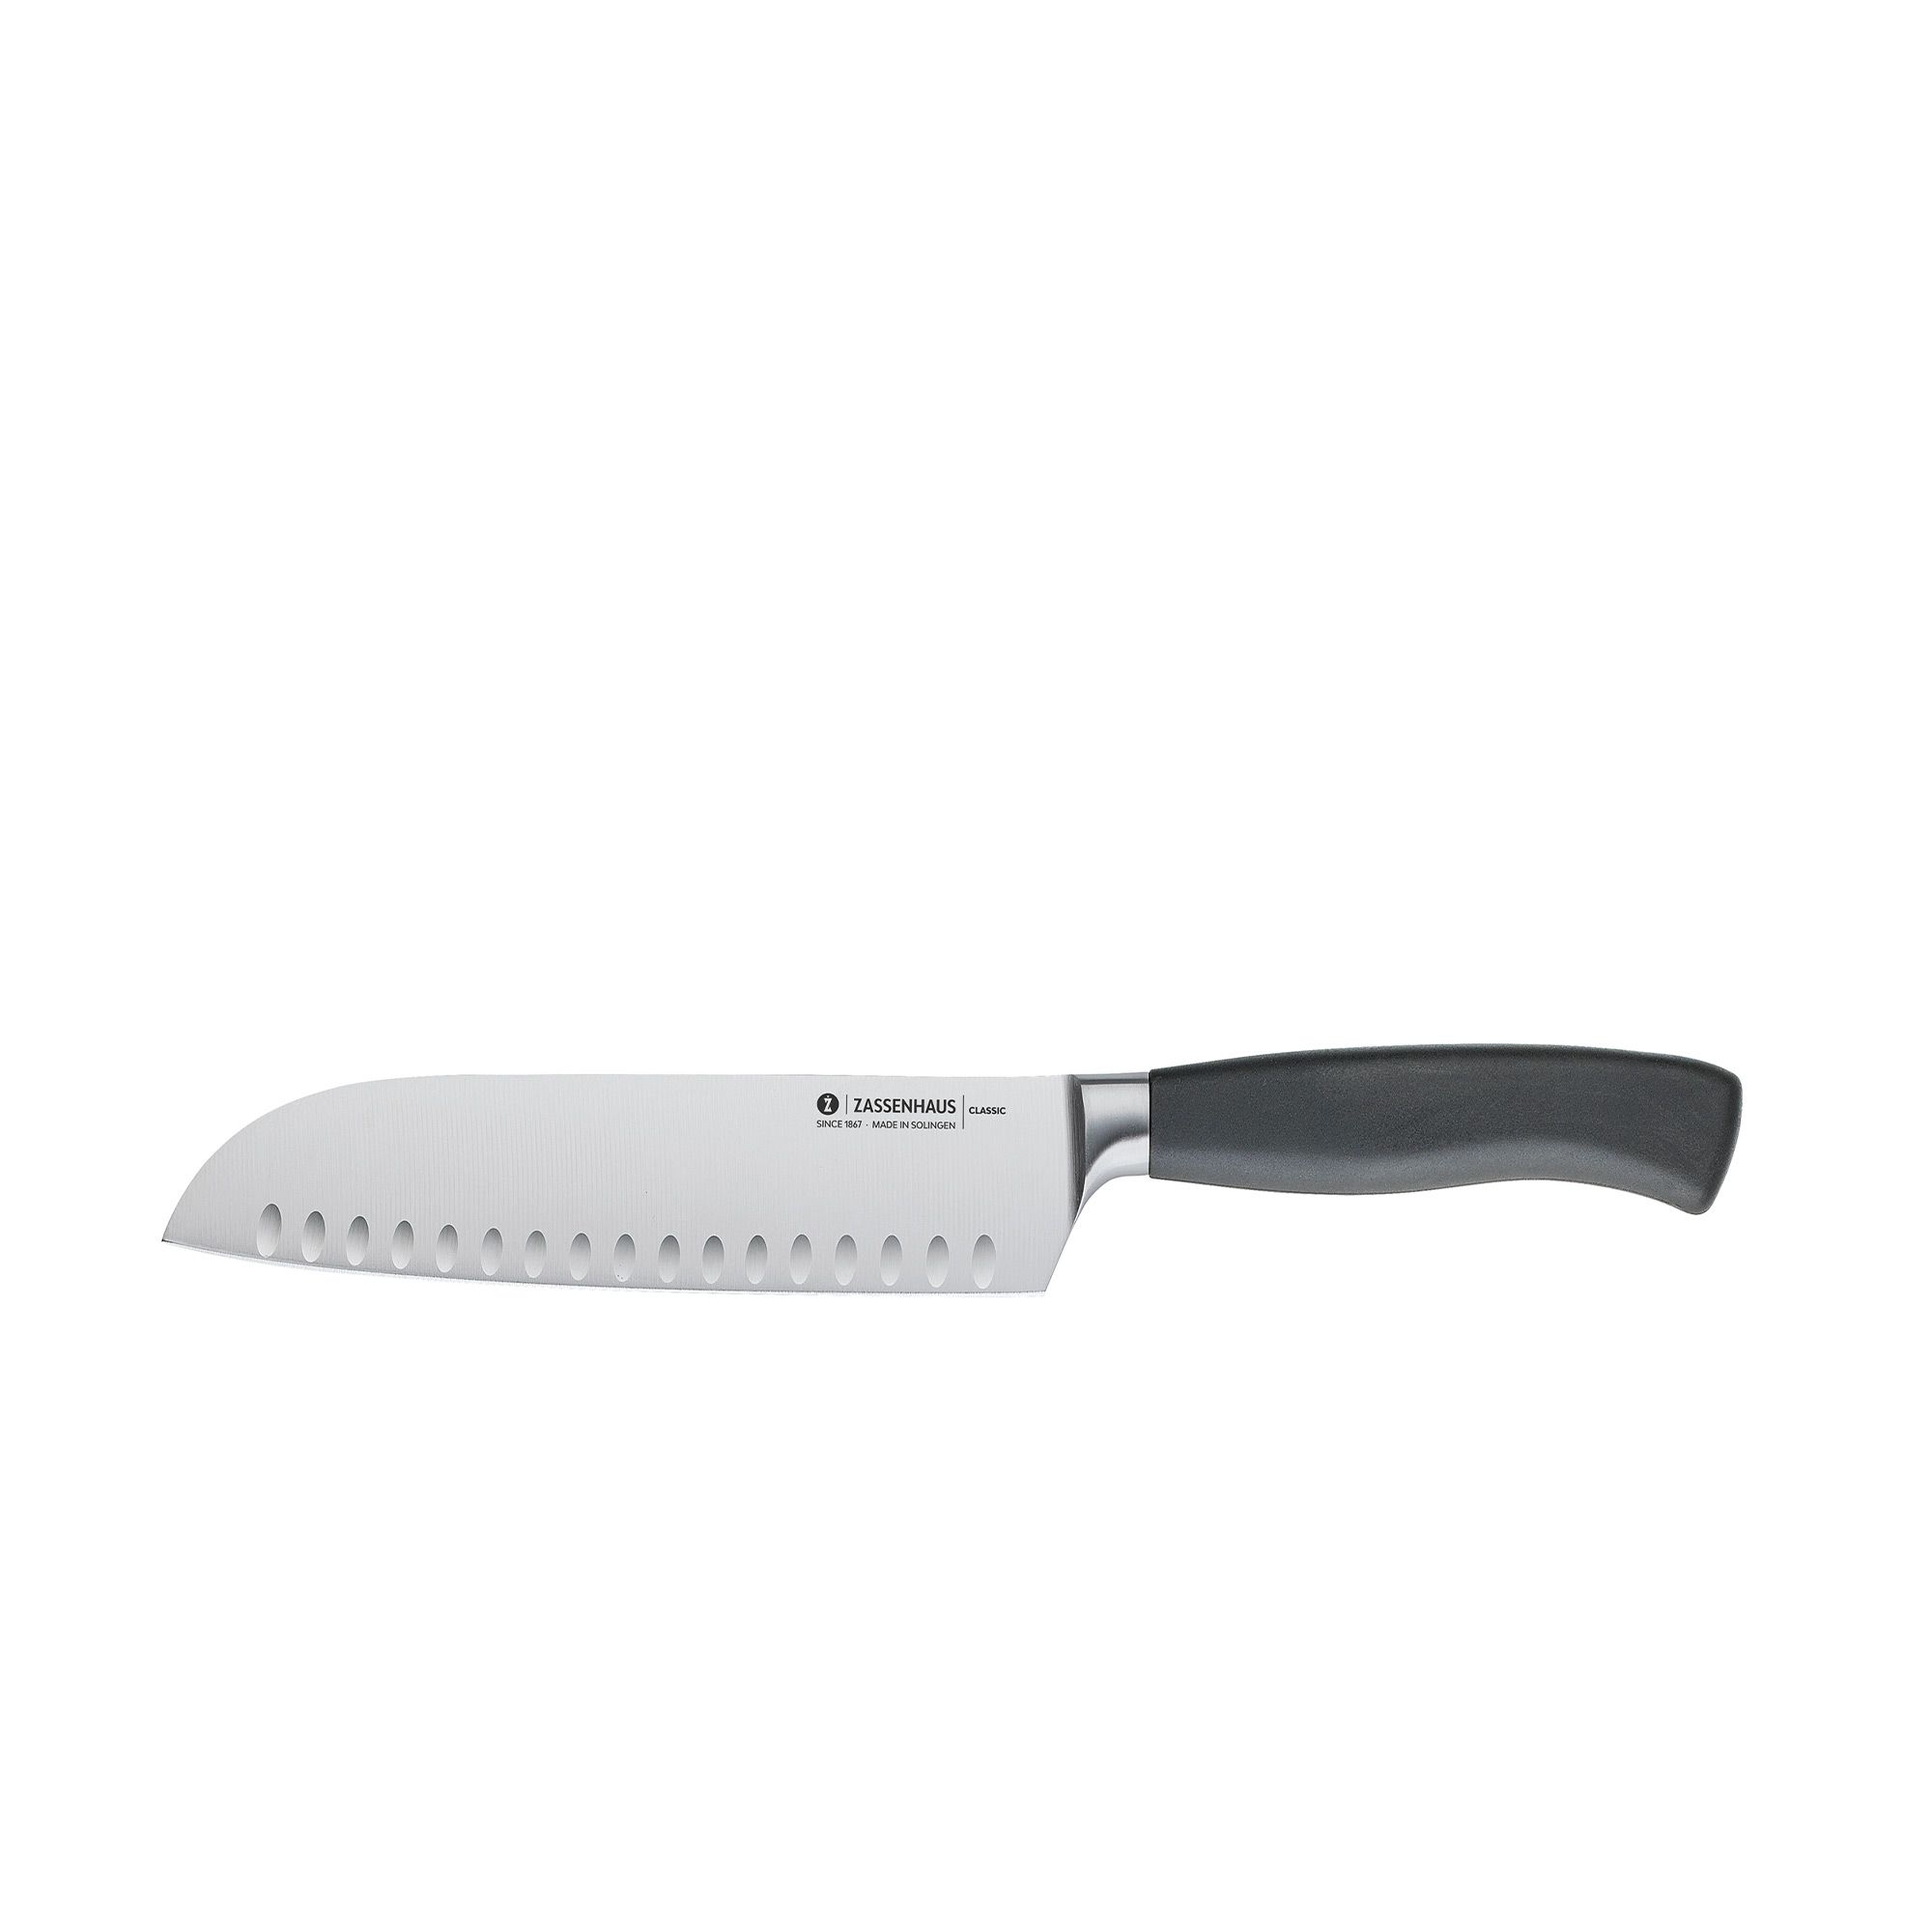 Zassenhaus  - Santoku knife 20cm - CLASSIC